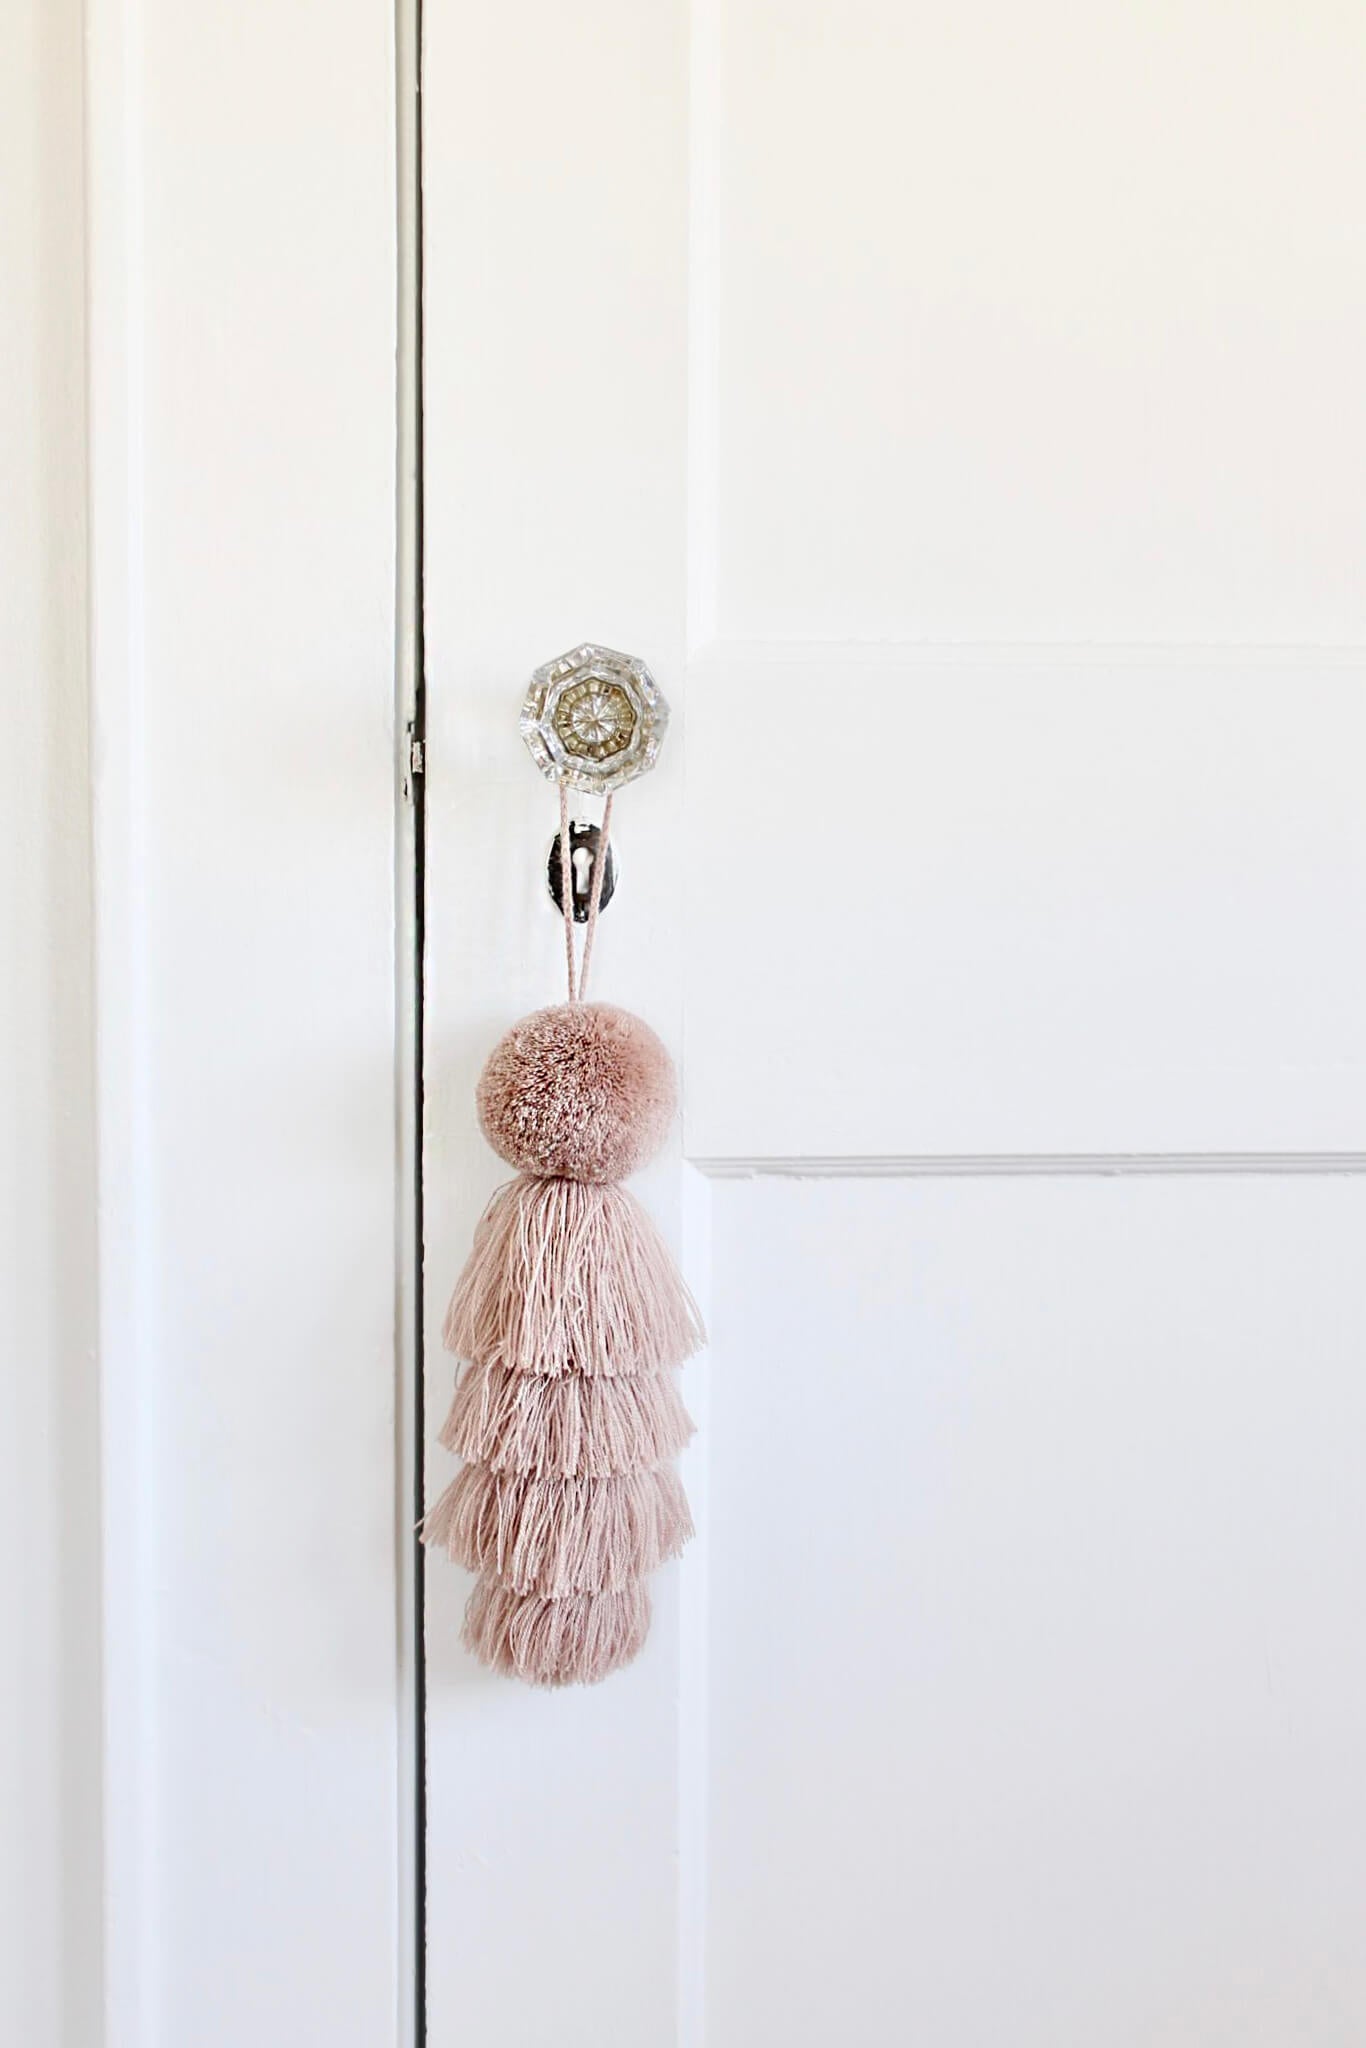 Blush pink tassel on glass door knob in white baby girl nursery interior